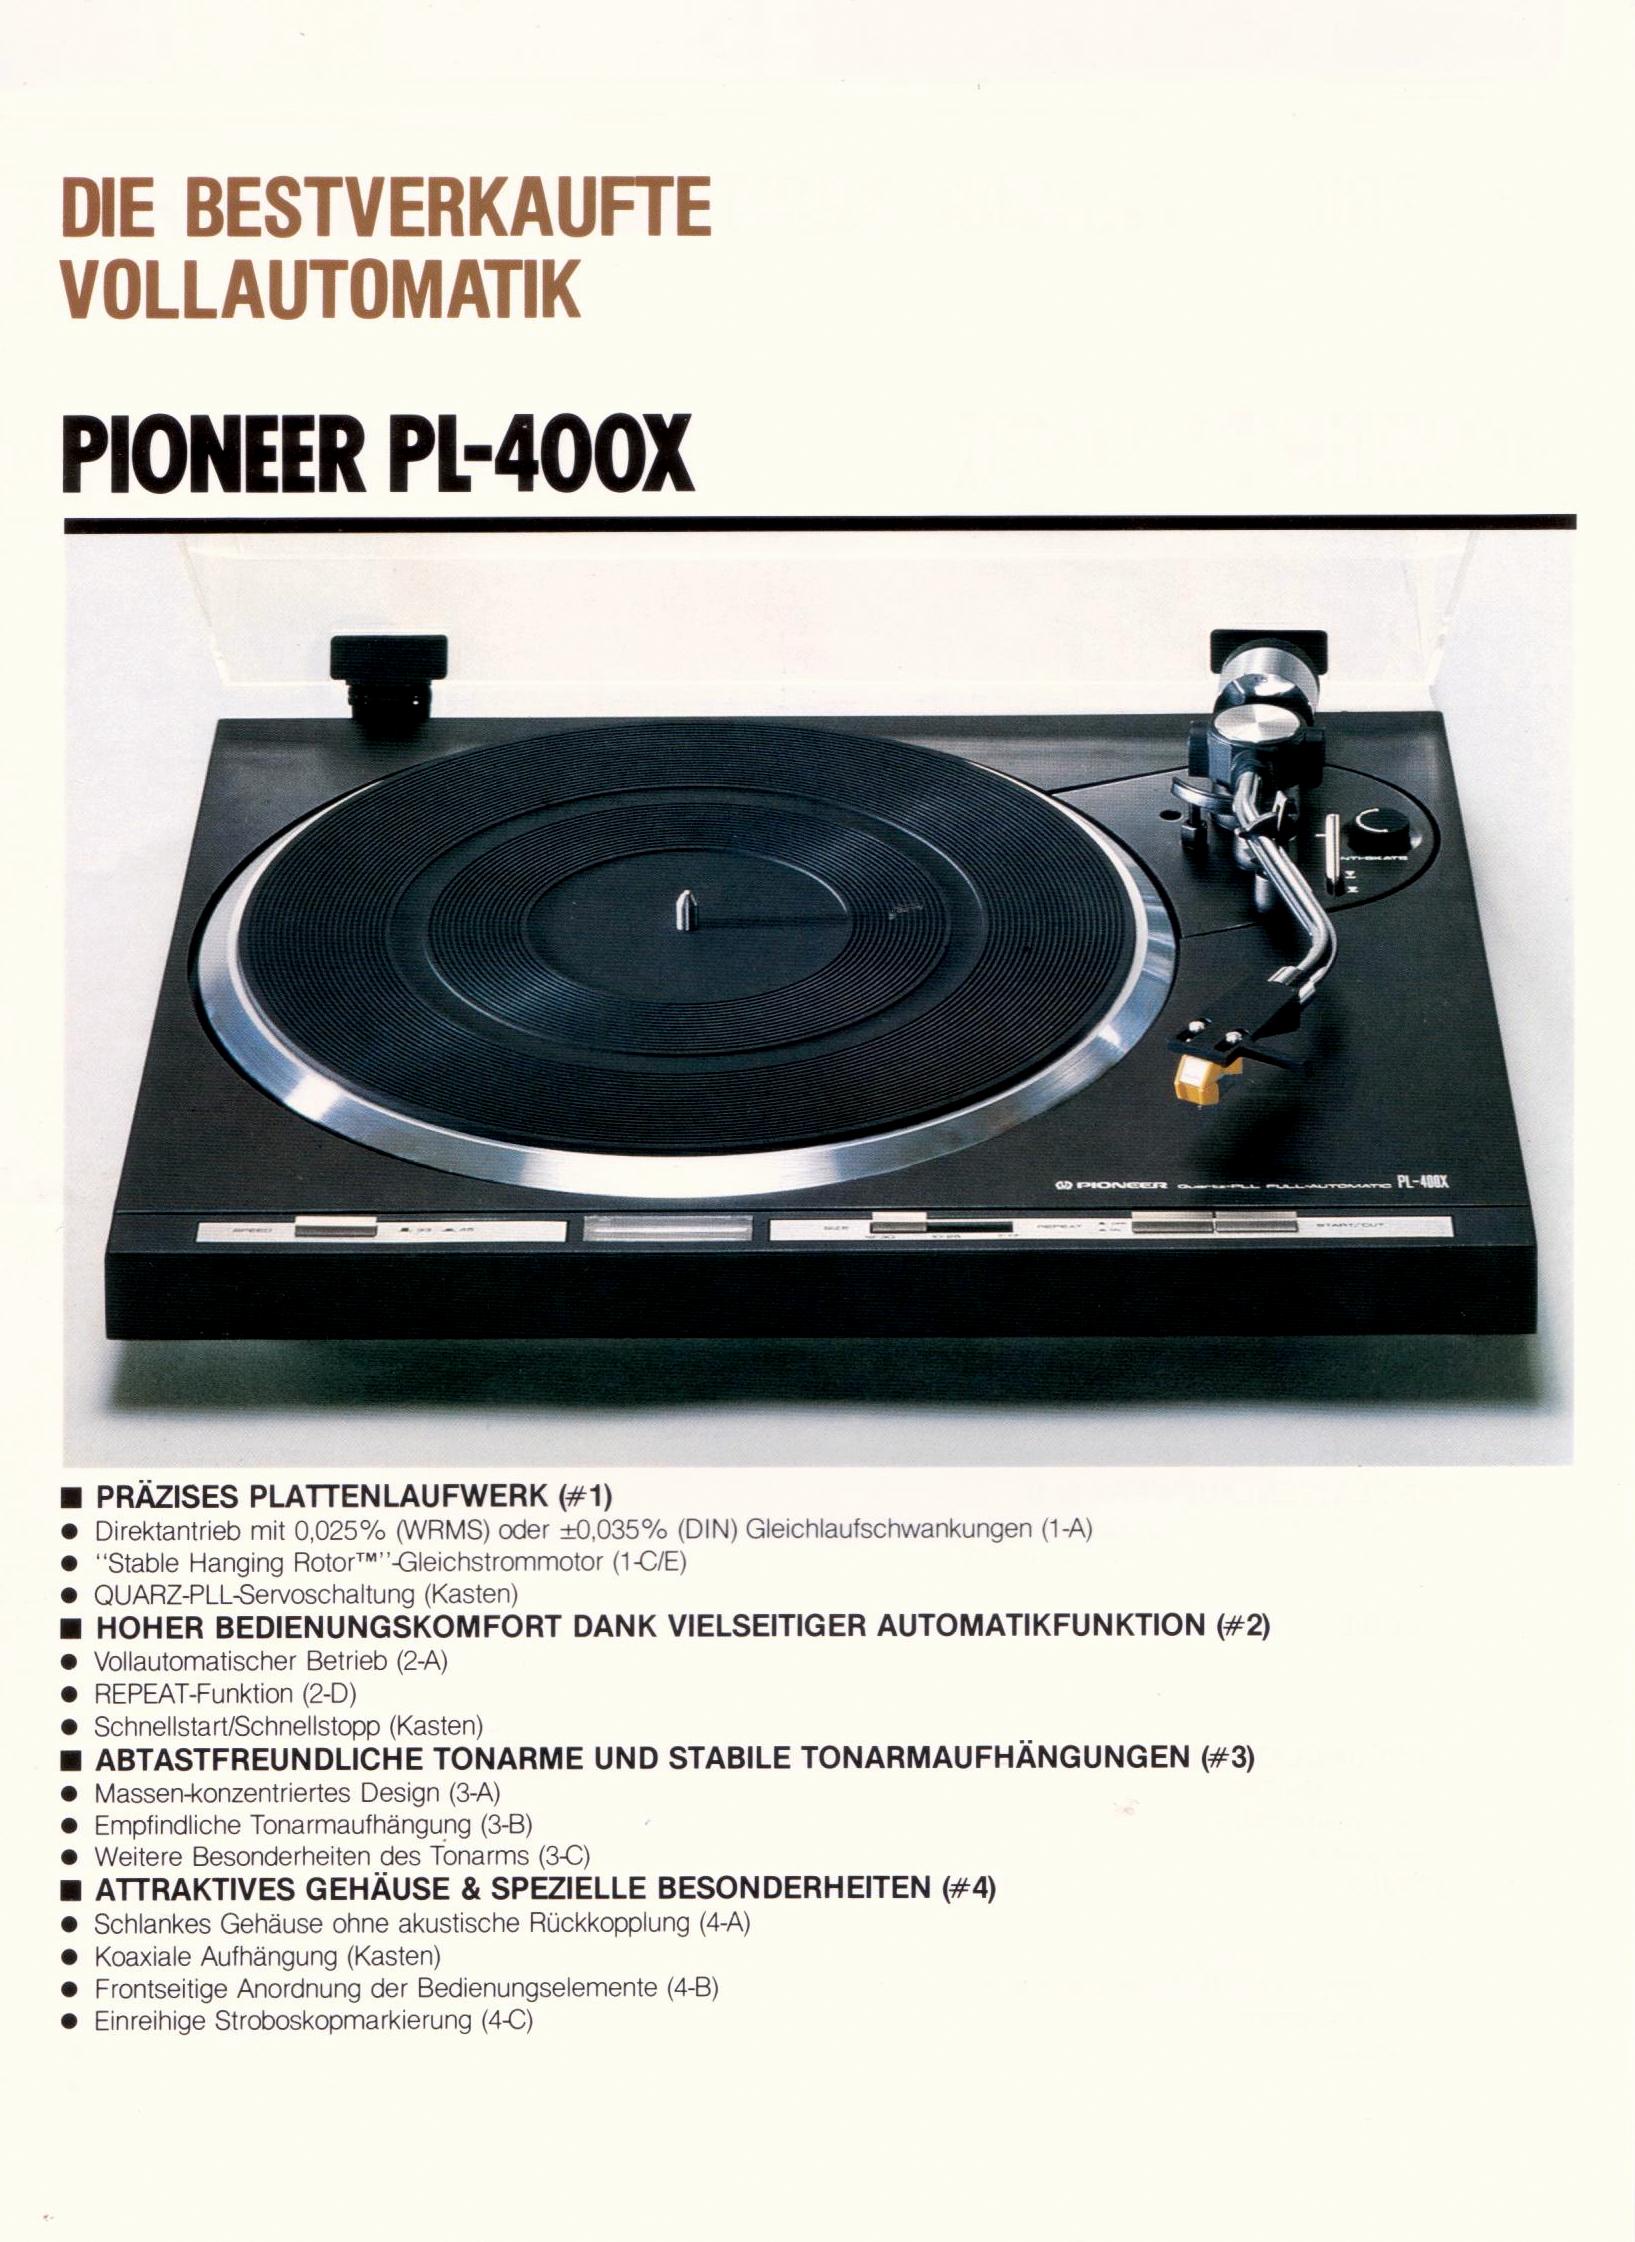 Pioneer PL-400 X-Prospekt-19801.jpg